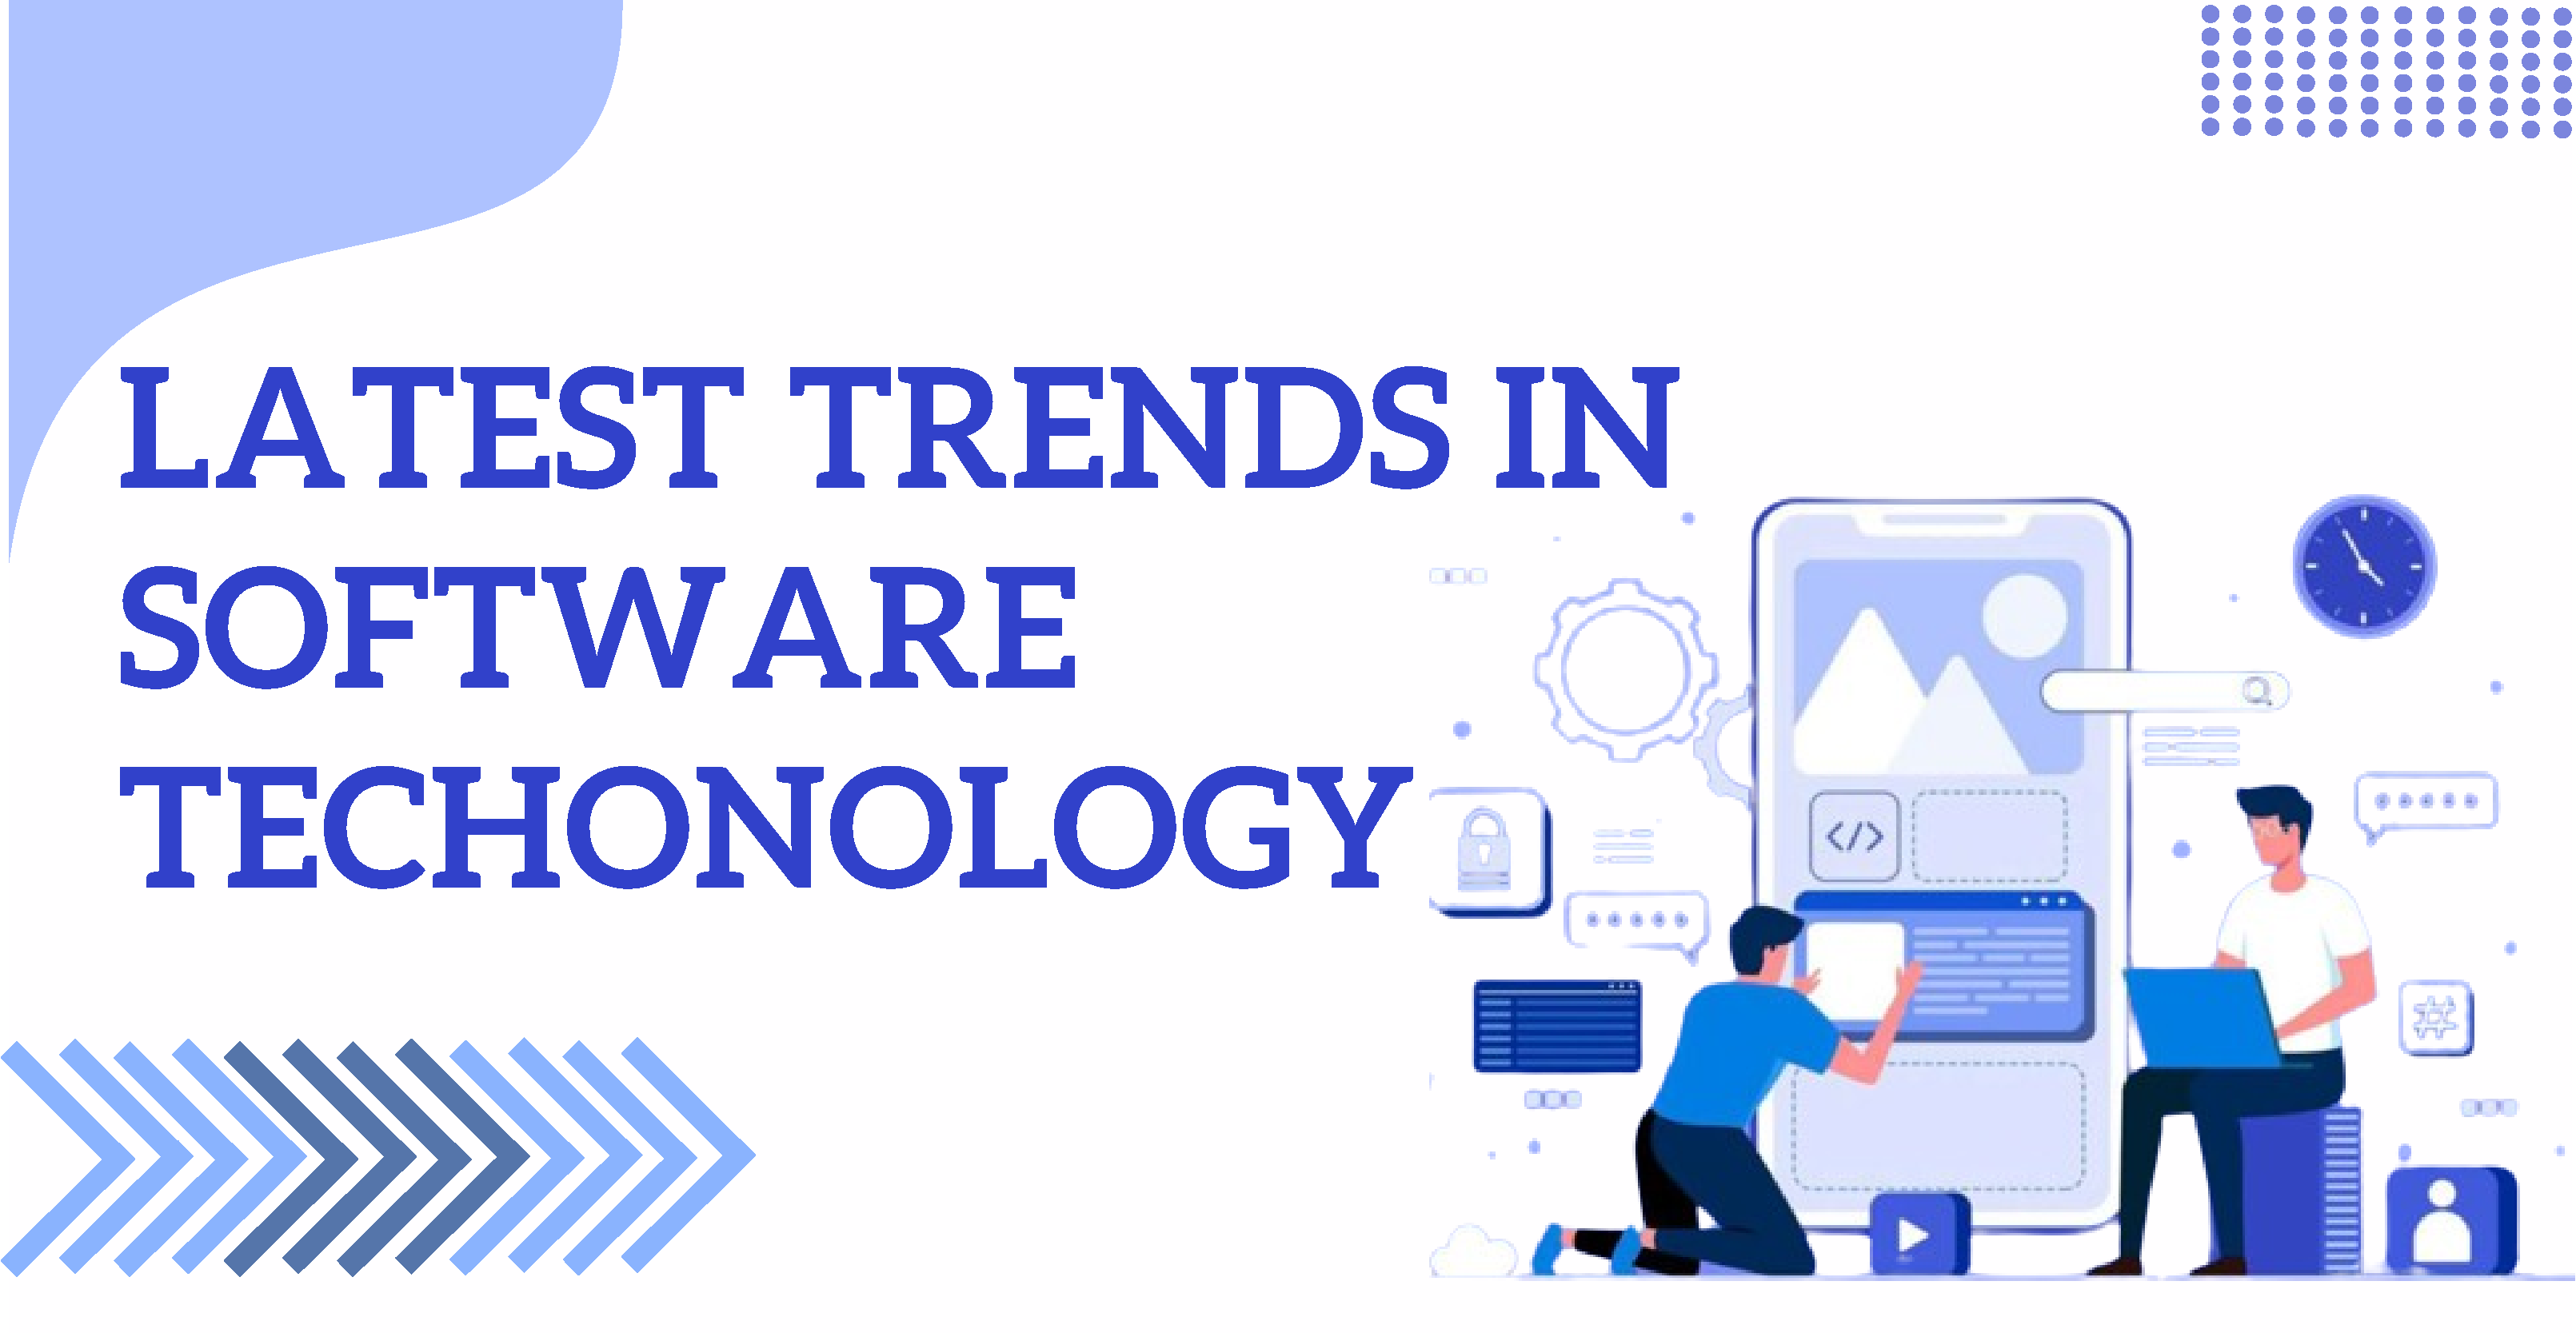 Software Technology trends